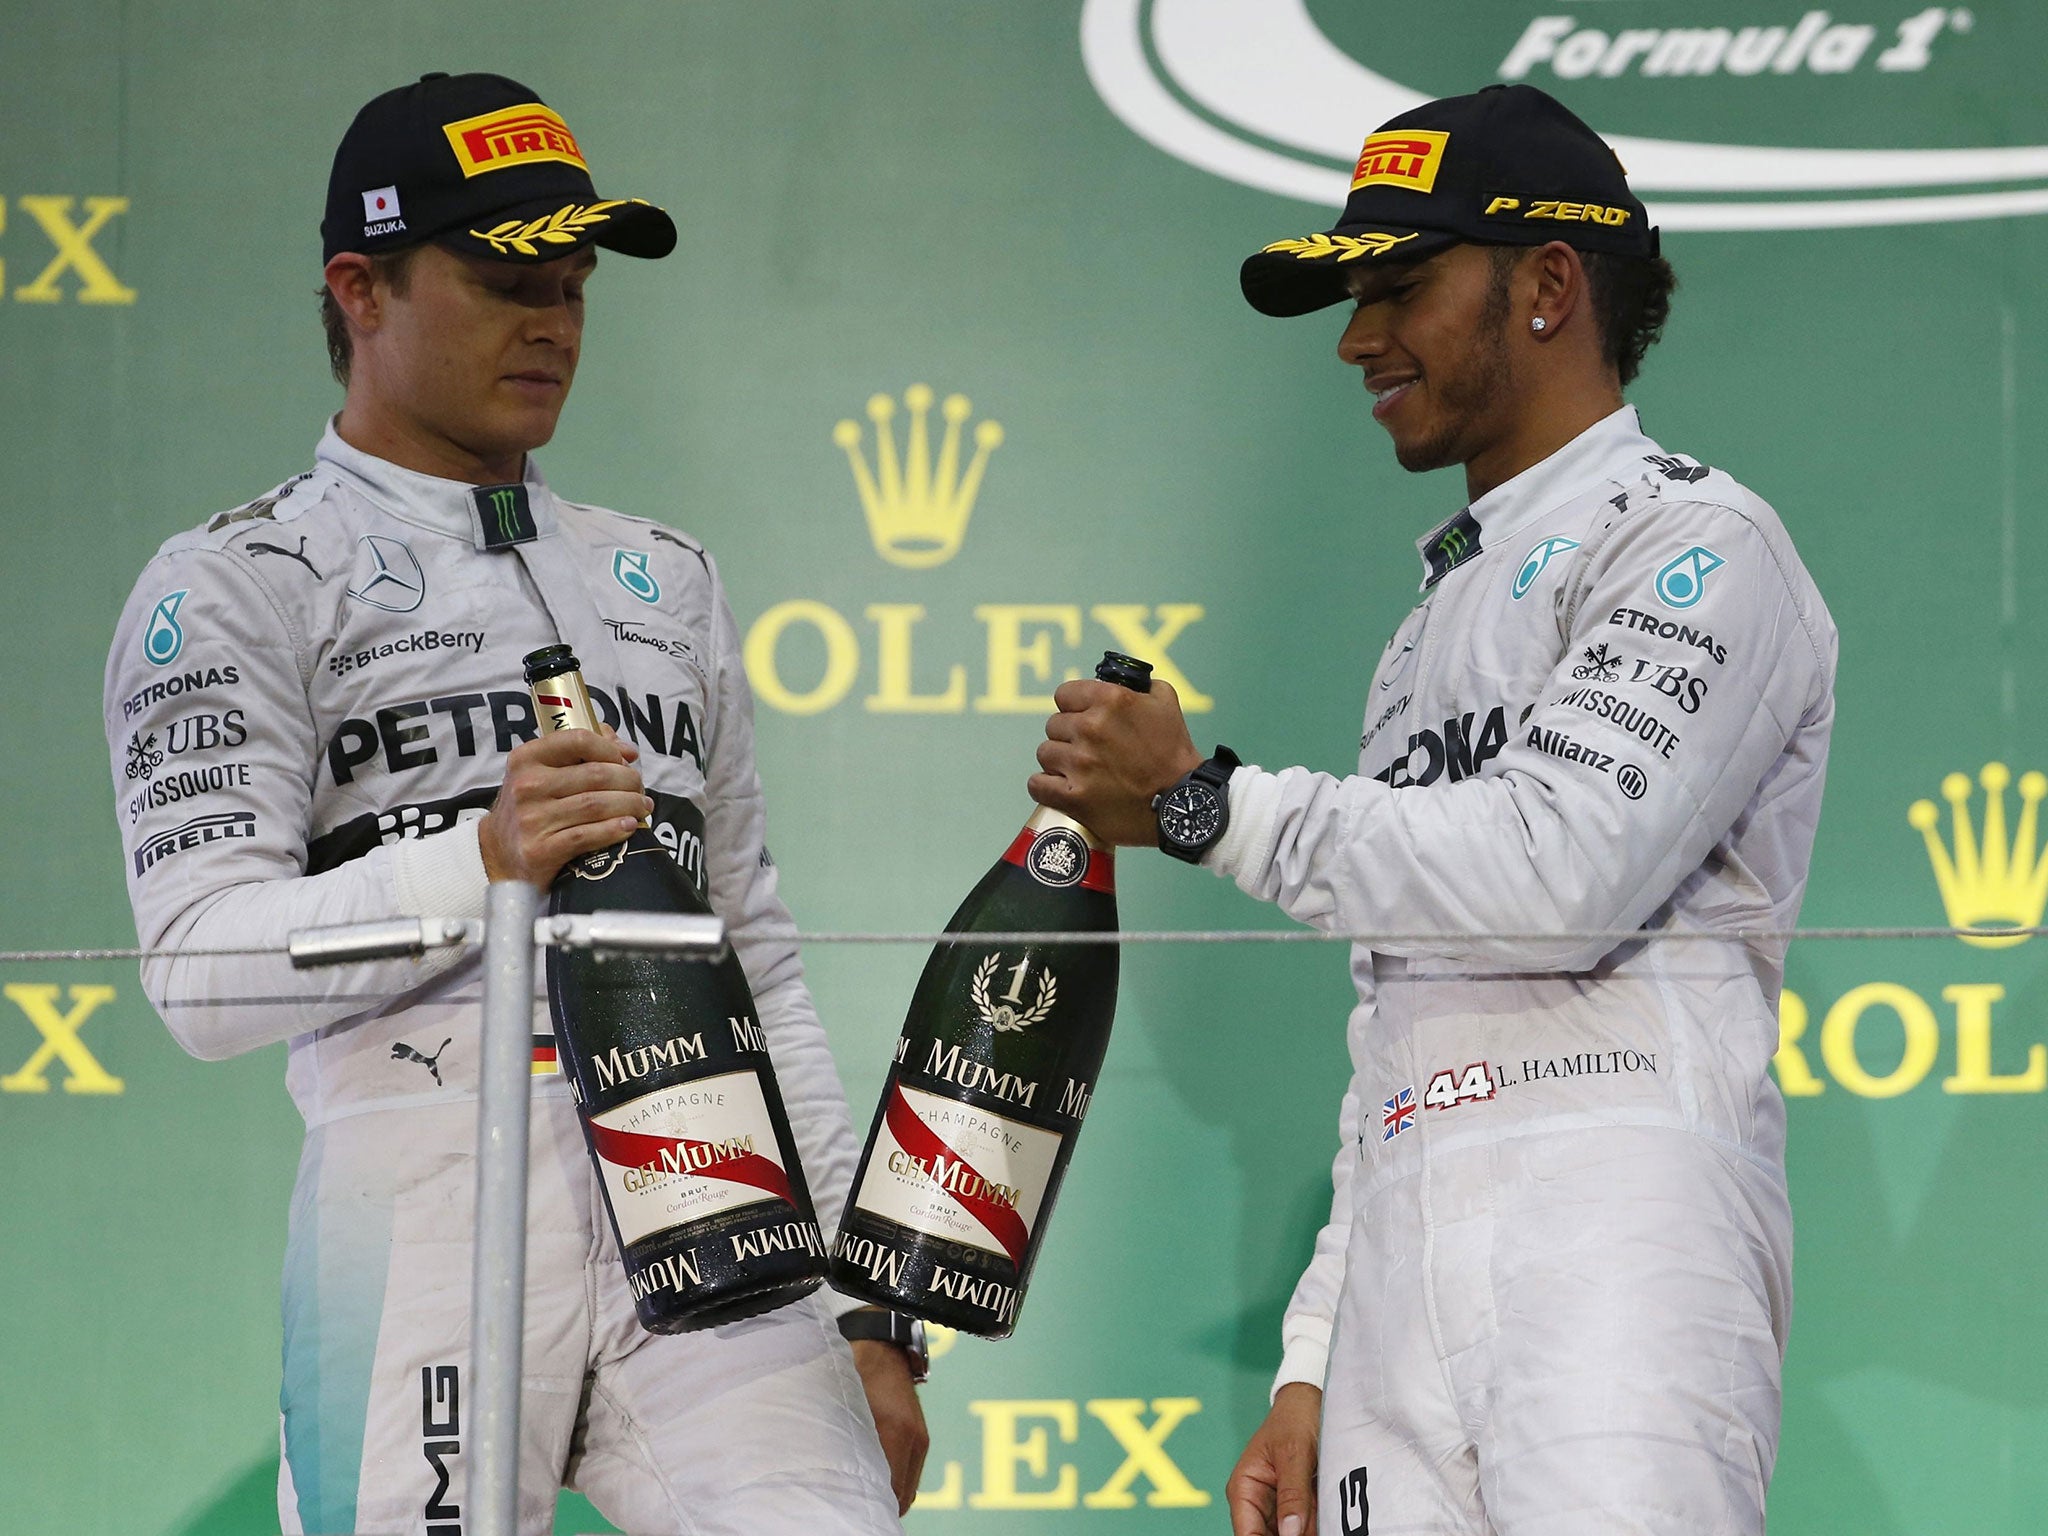 Mercedes Formula One driver Lewis Hamilton (R) of Britain celebrates with Mercedes Formula One driver Nico Rosberg of Germany after Hamilton won the Japanese Grand Prix